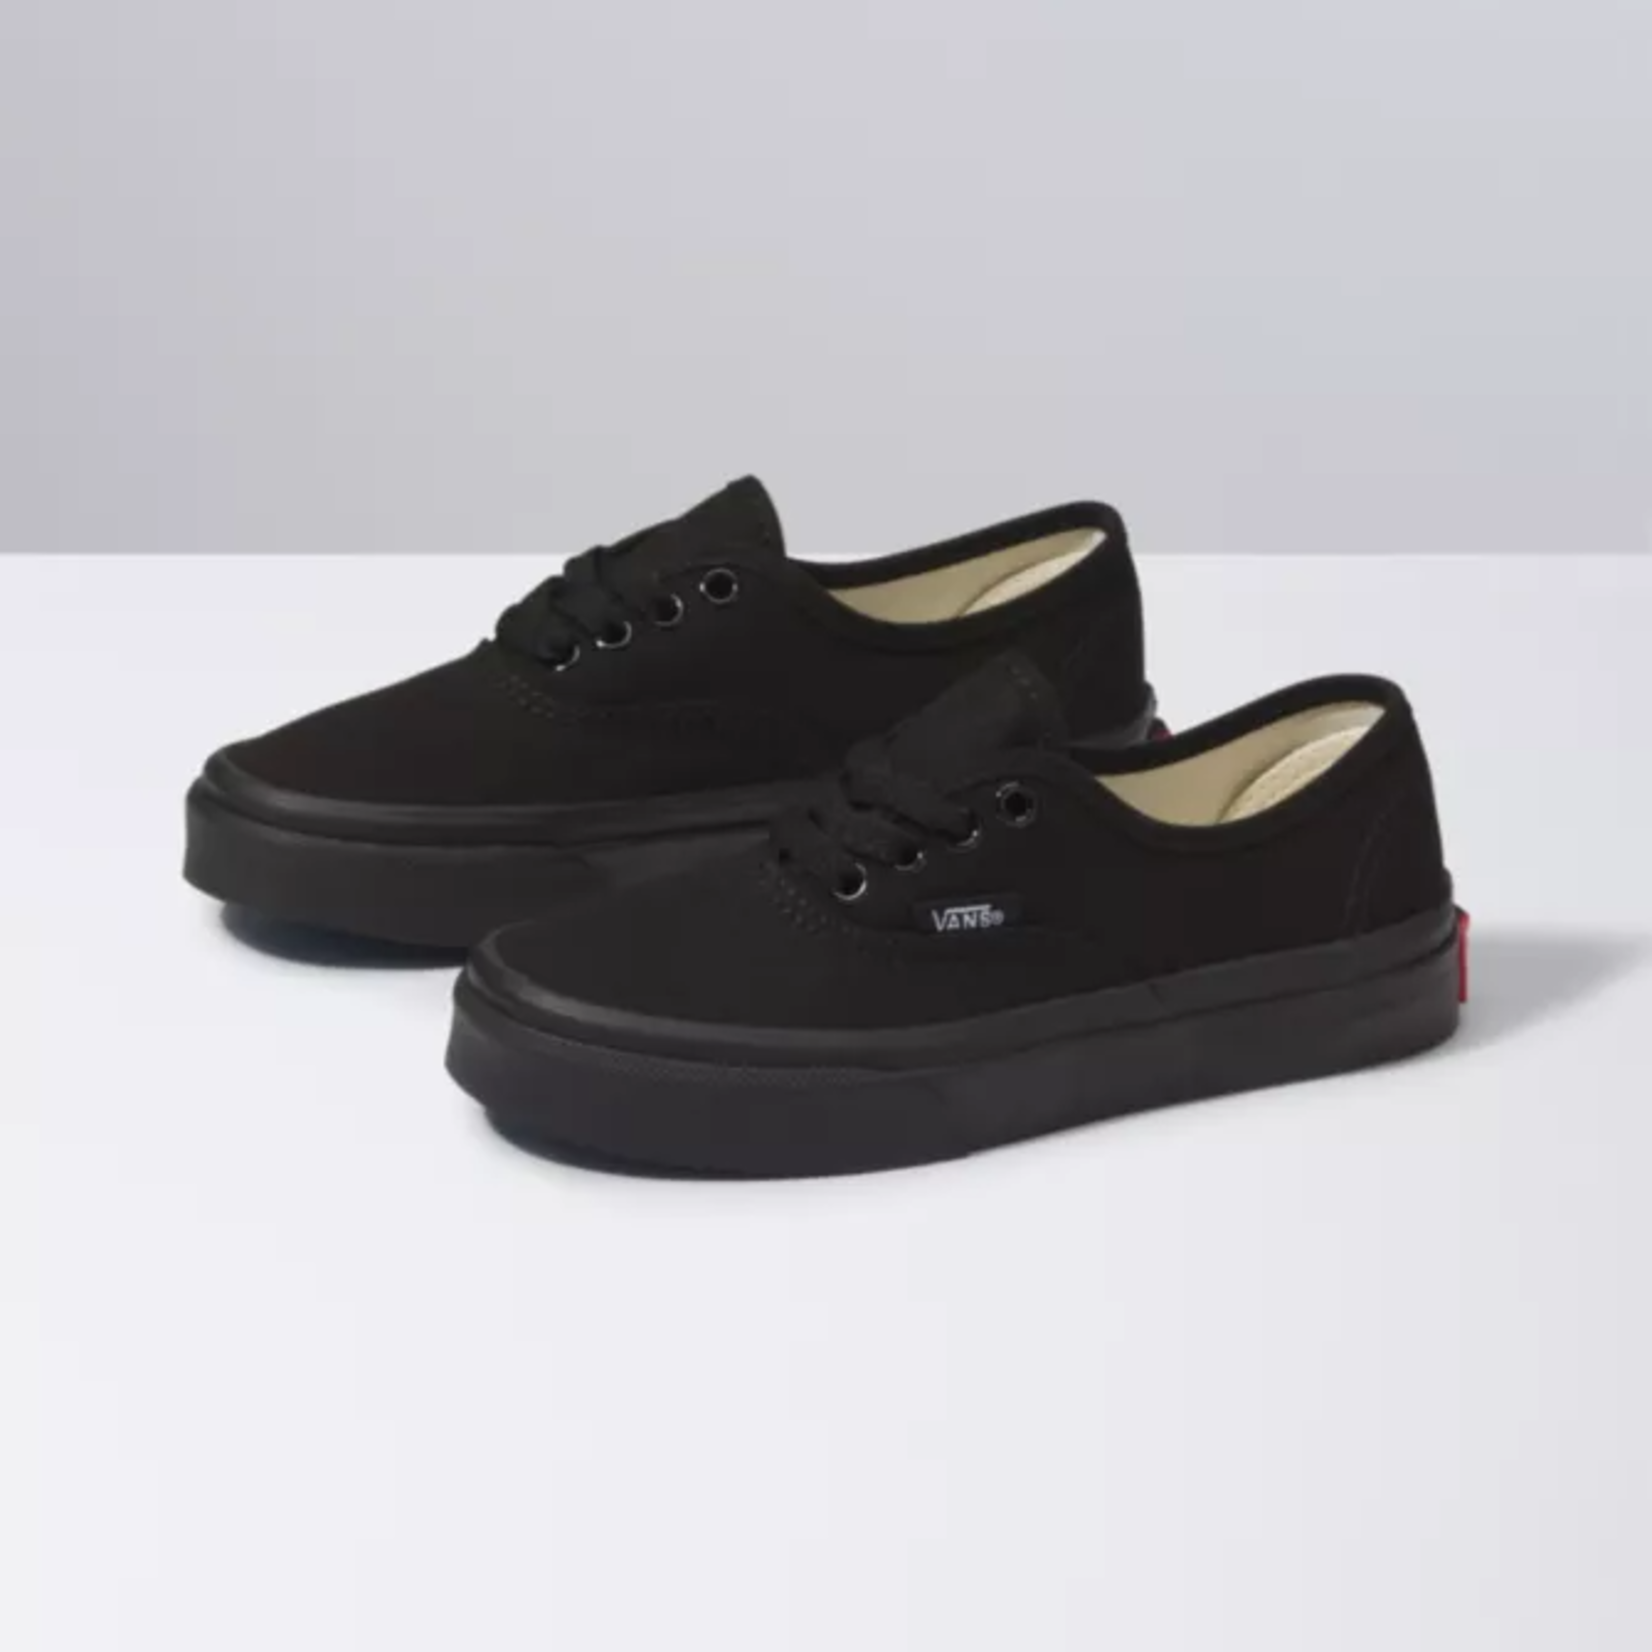 Vans Vans Authentic Youth Skate Shoes - Black/Black -